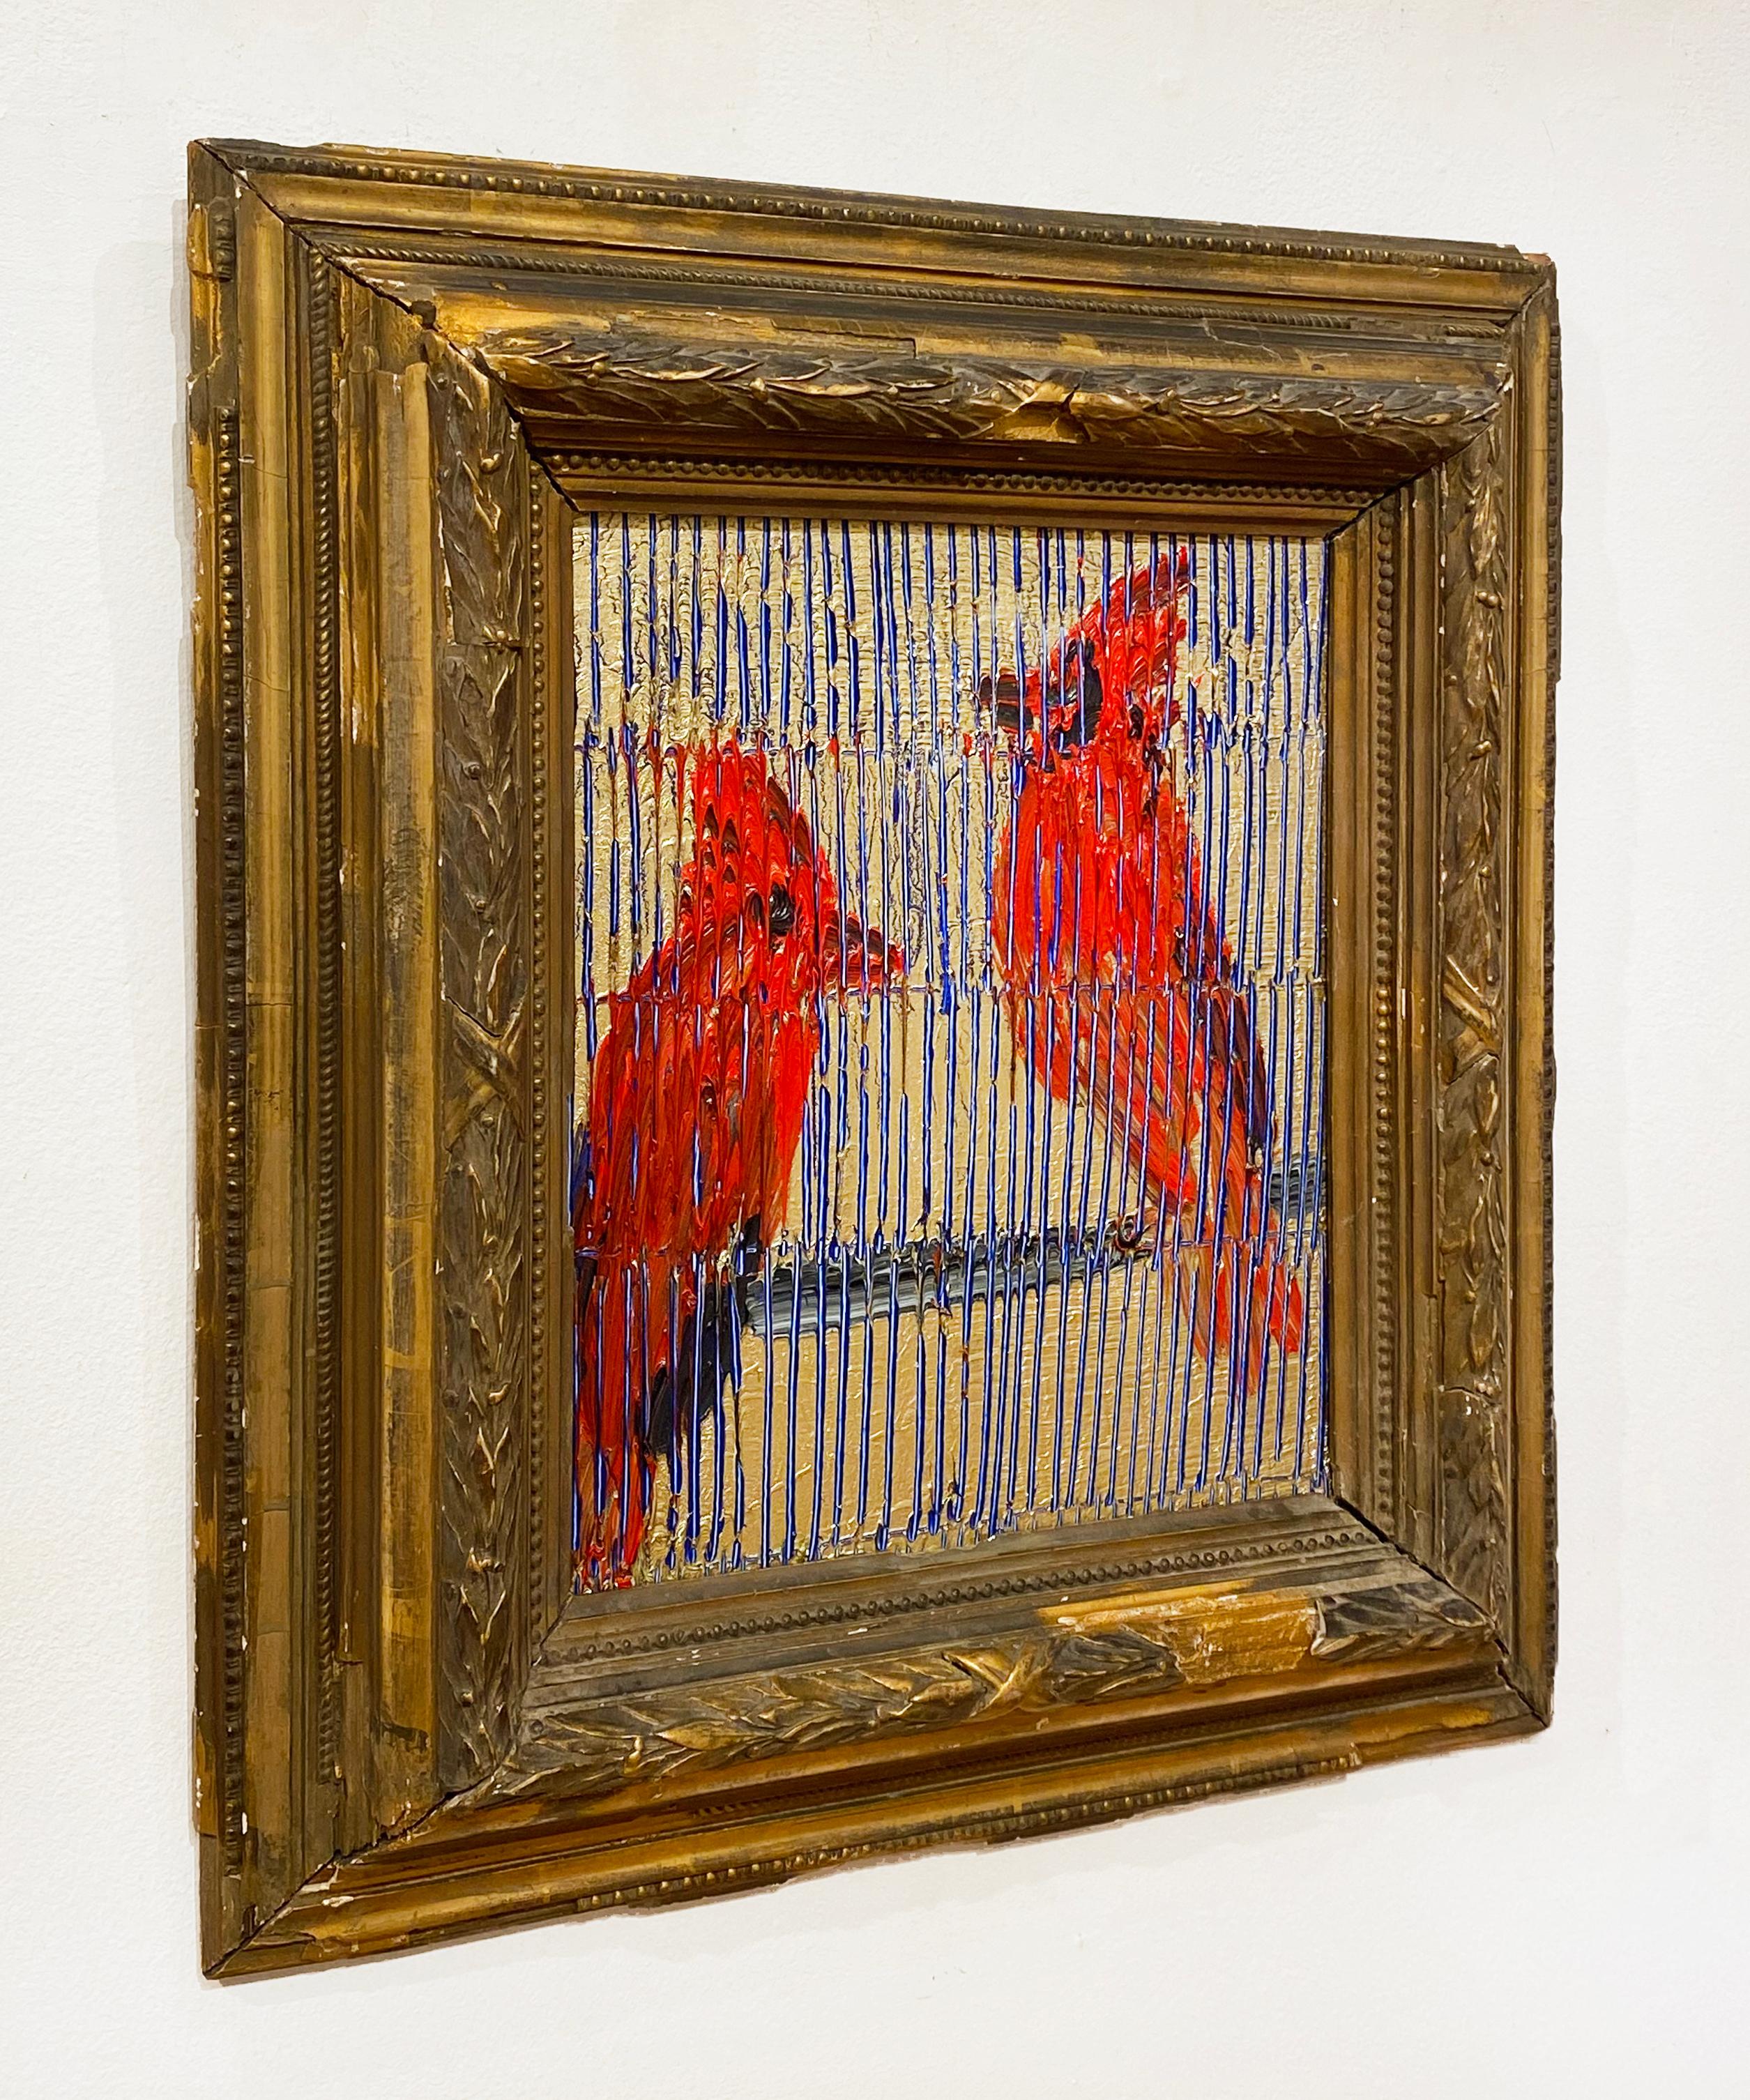 Artist:  Slonem, Hunt
Title: Cardinals
Date:  2023
Medium:  Oil on Wood
Unframed Dimensions:  13.5